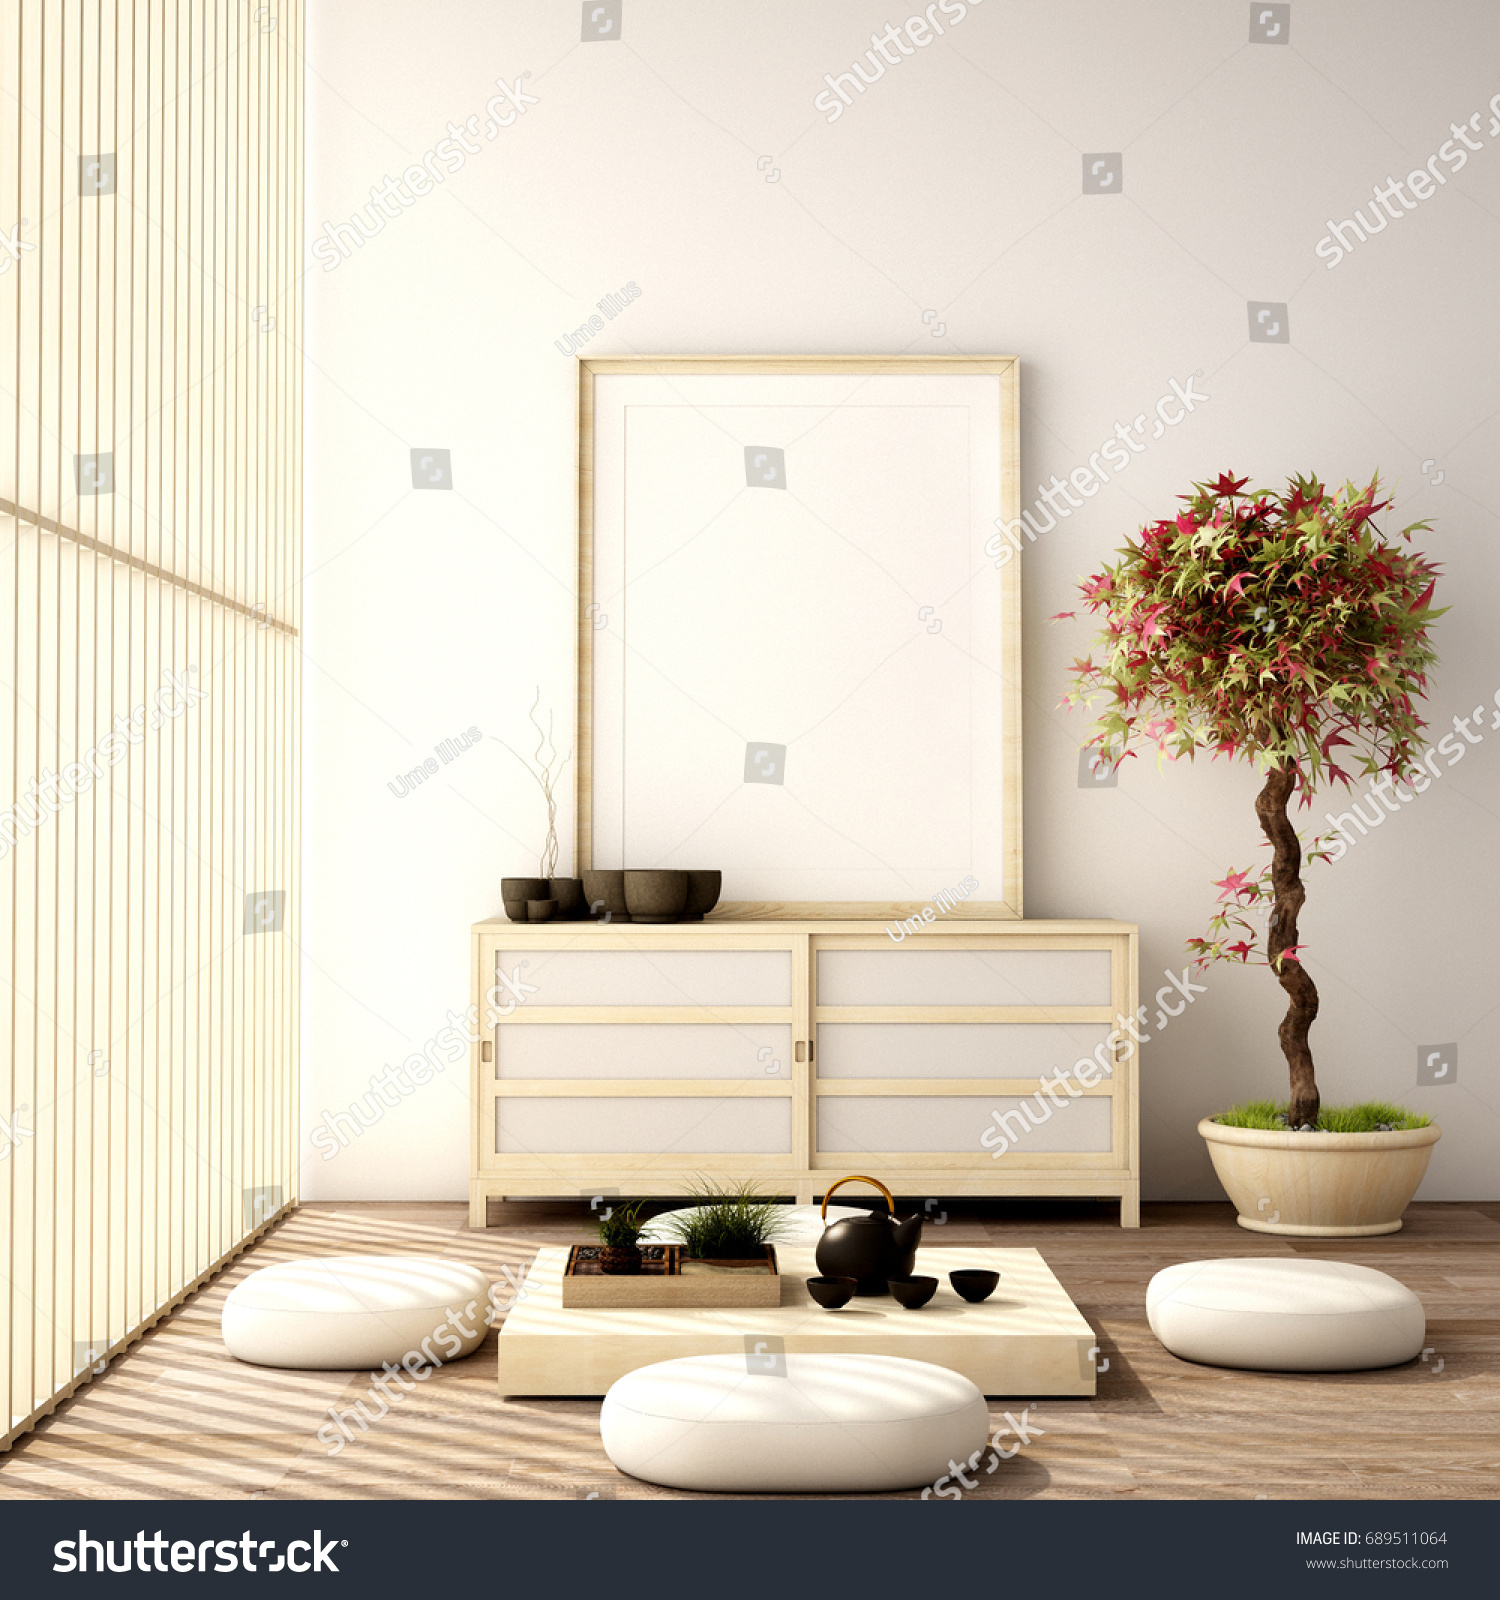 Interior Design Modern Living Room Wood Stockillustration